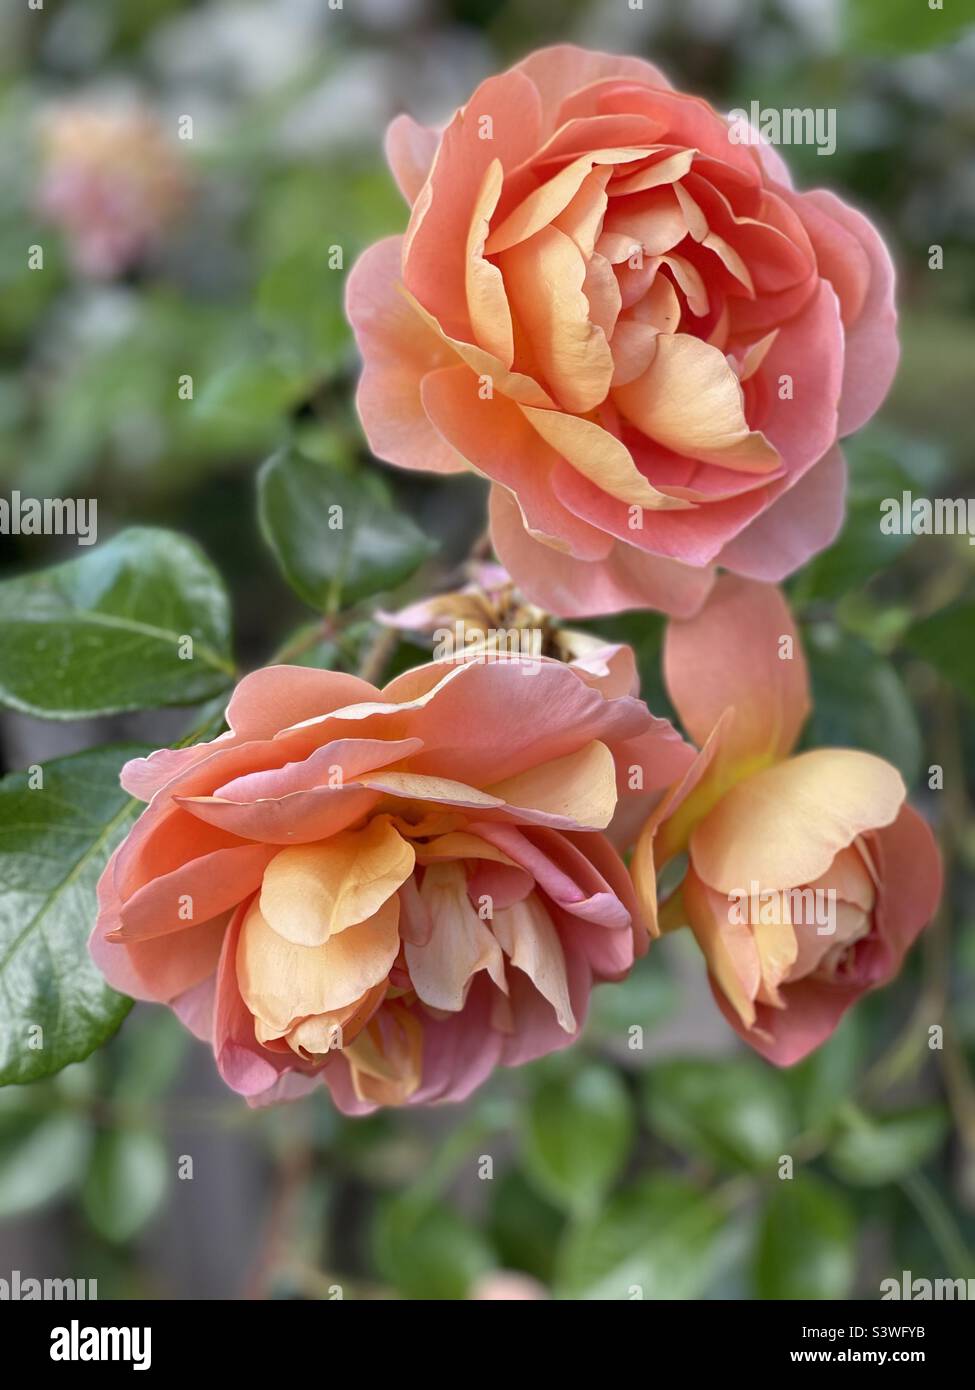 Magical world of roses - orange pink tea rose Stock Photo